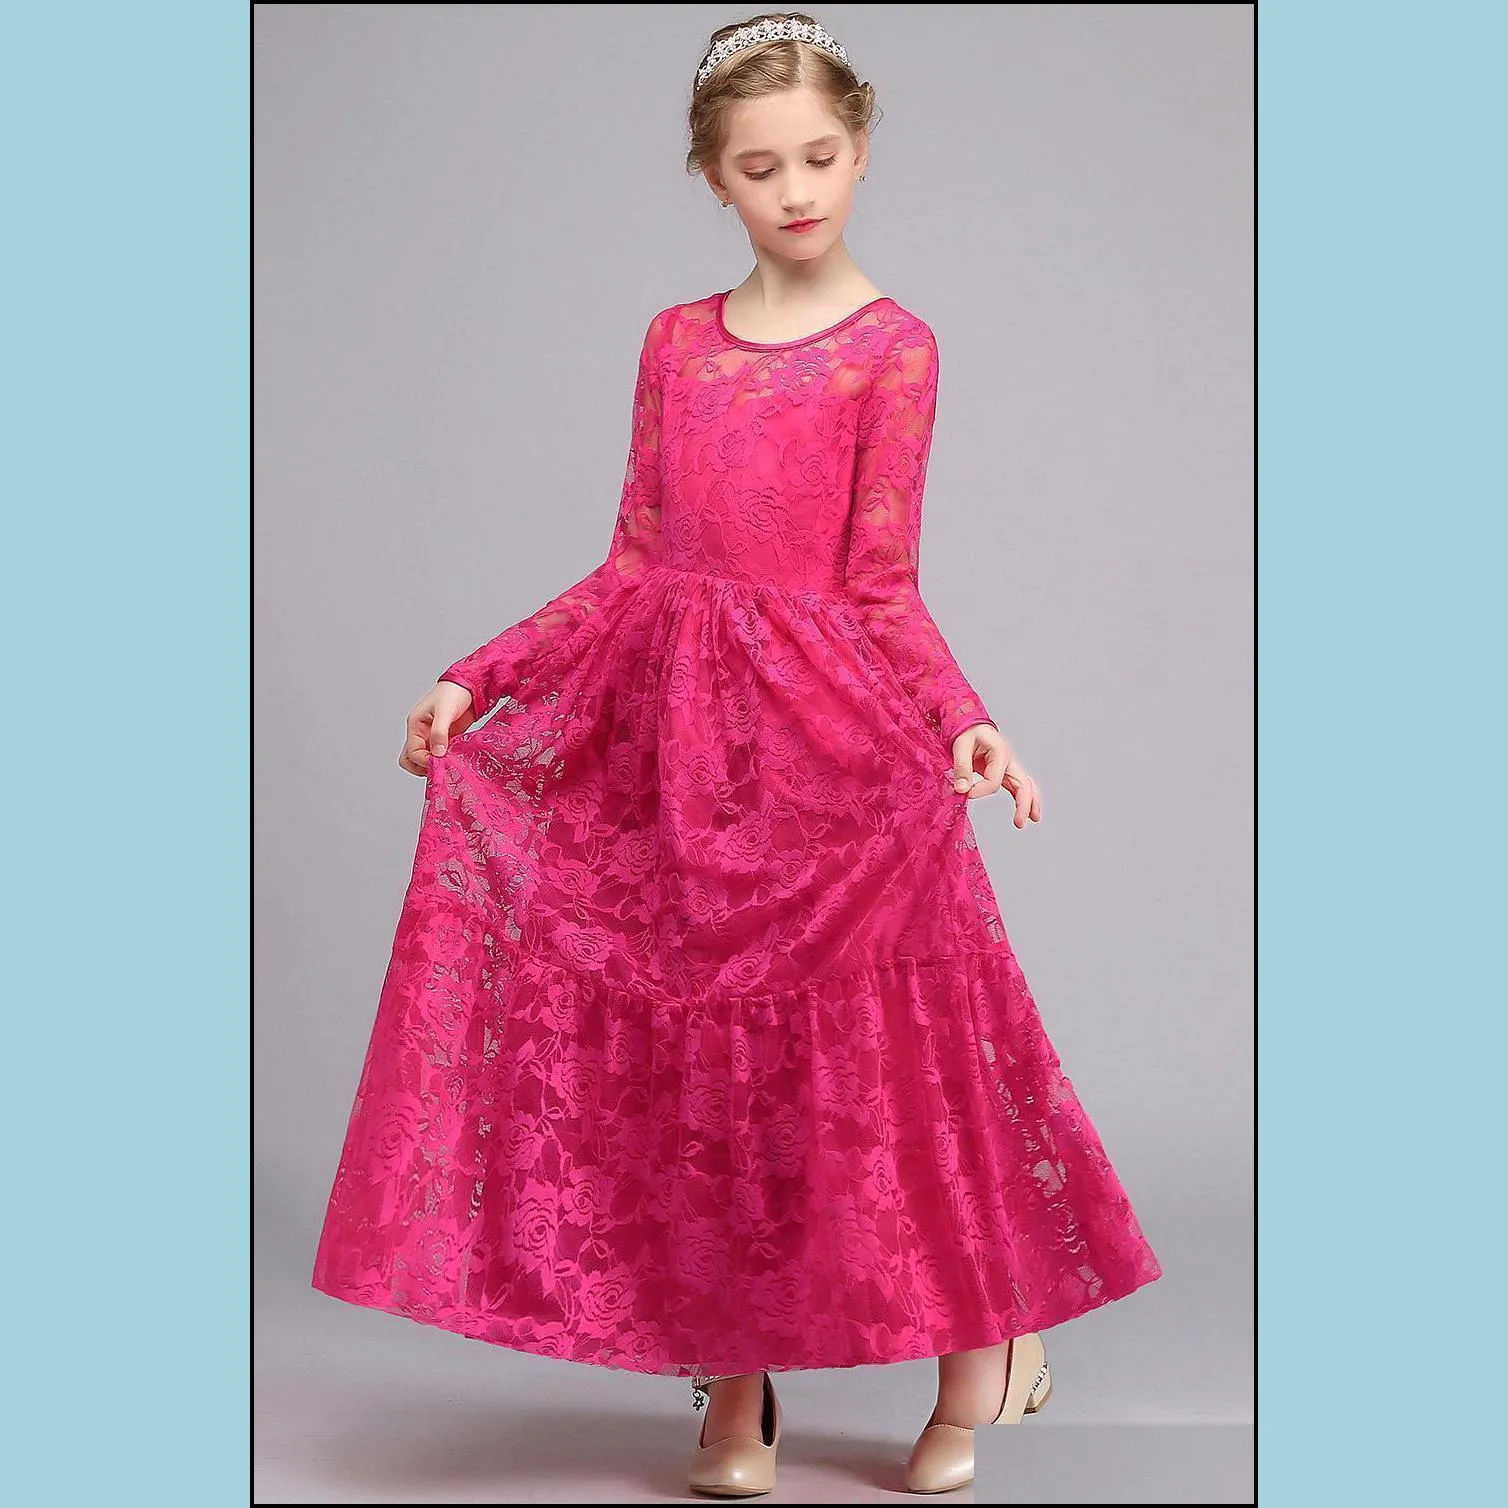 2018 White A Line Designer Lace Flower Girl Dresses Jewel Neck Princess Long Sleeves Kids Girls Communion Party Wears Dresses MC0366